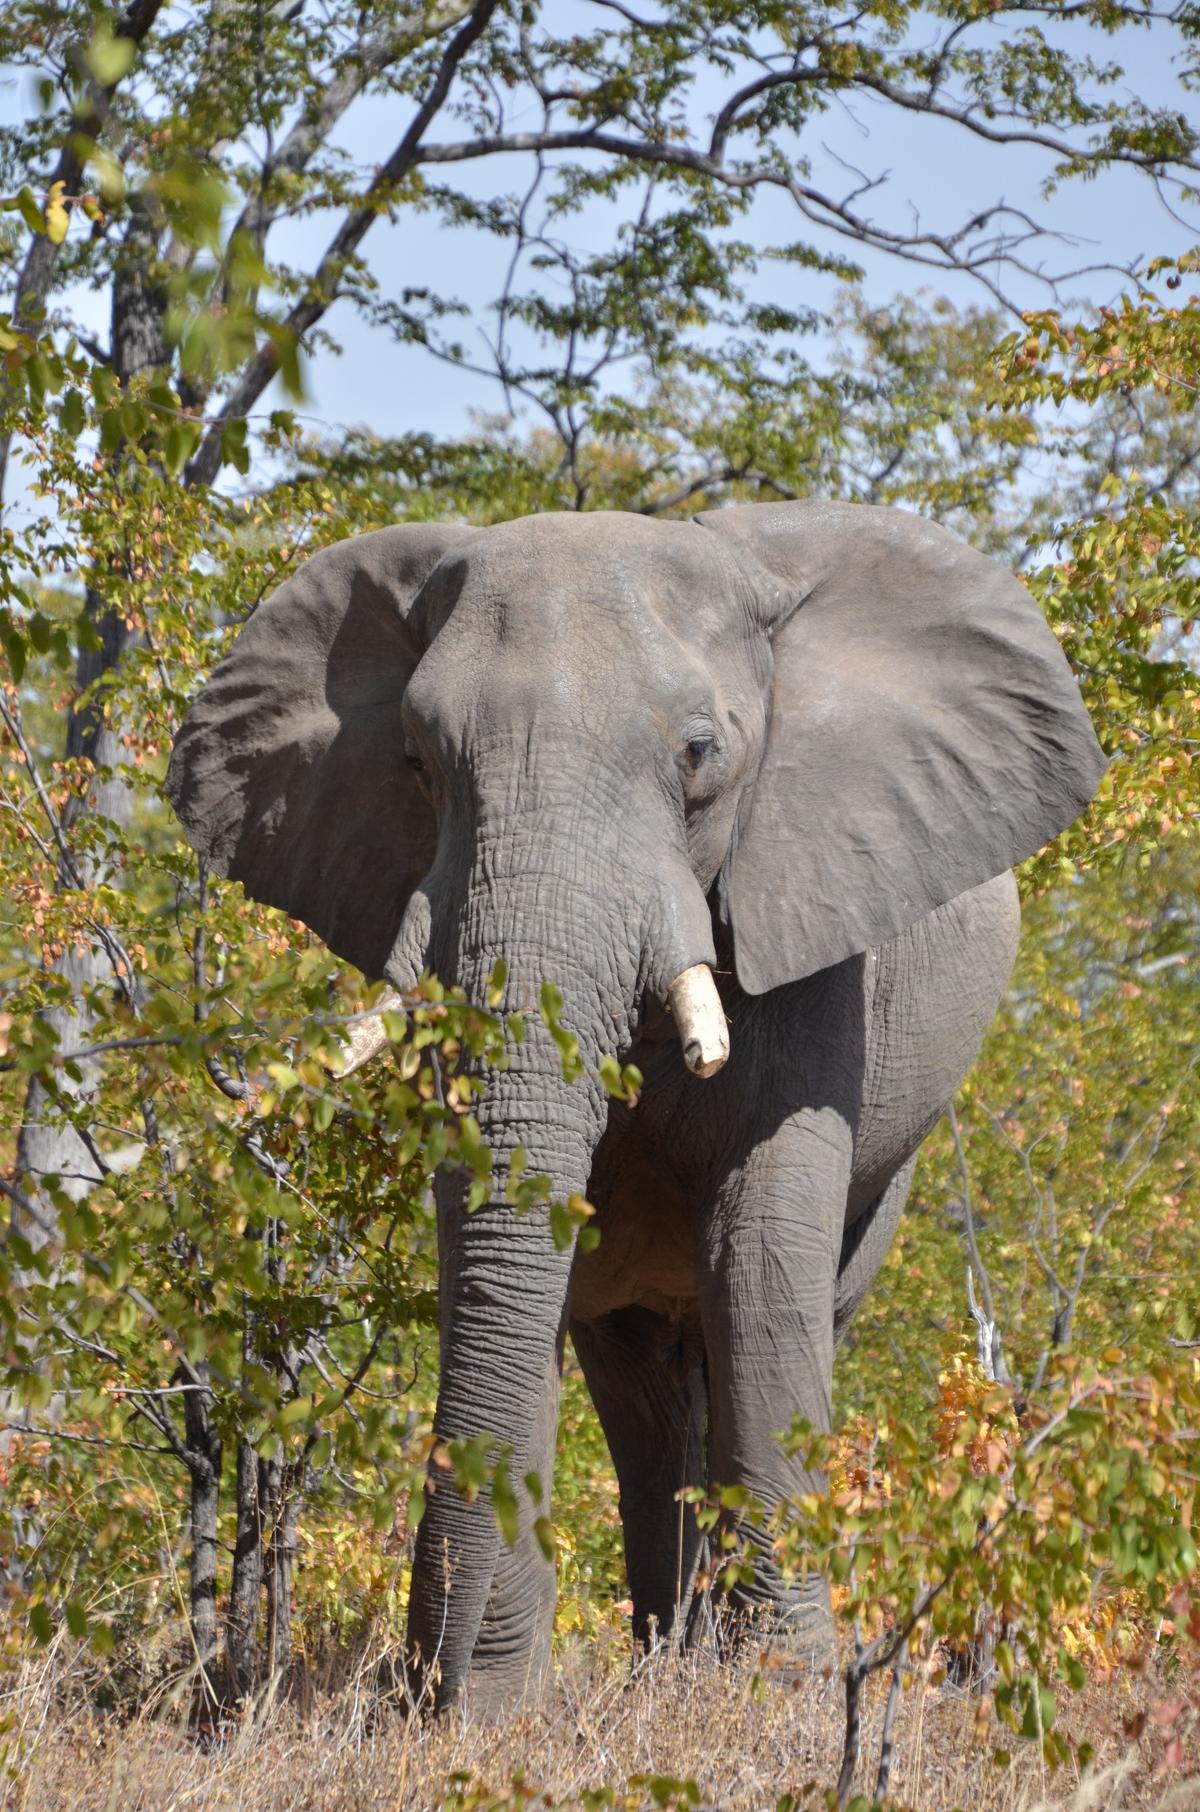 A close up of the elephant. (Courtesy of Kevin Revolinski)